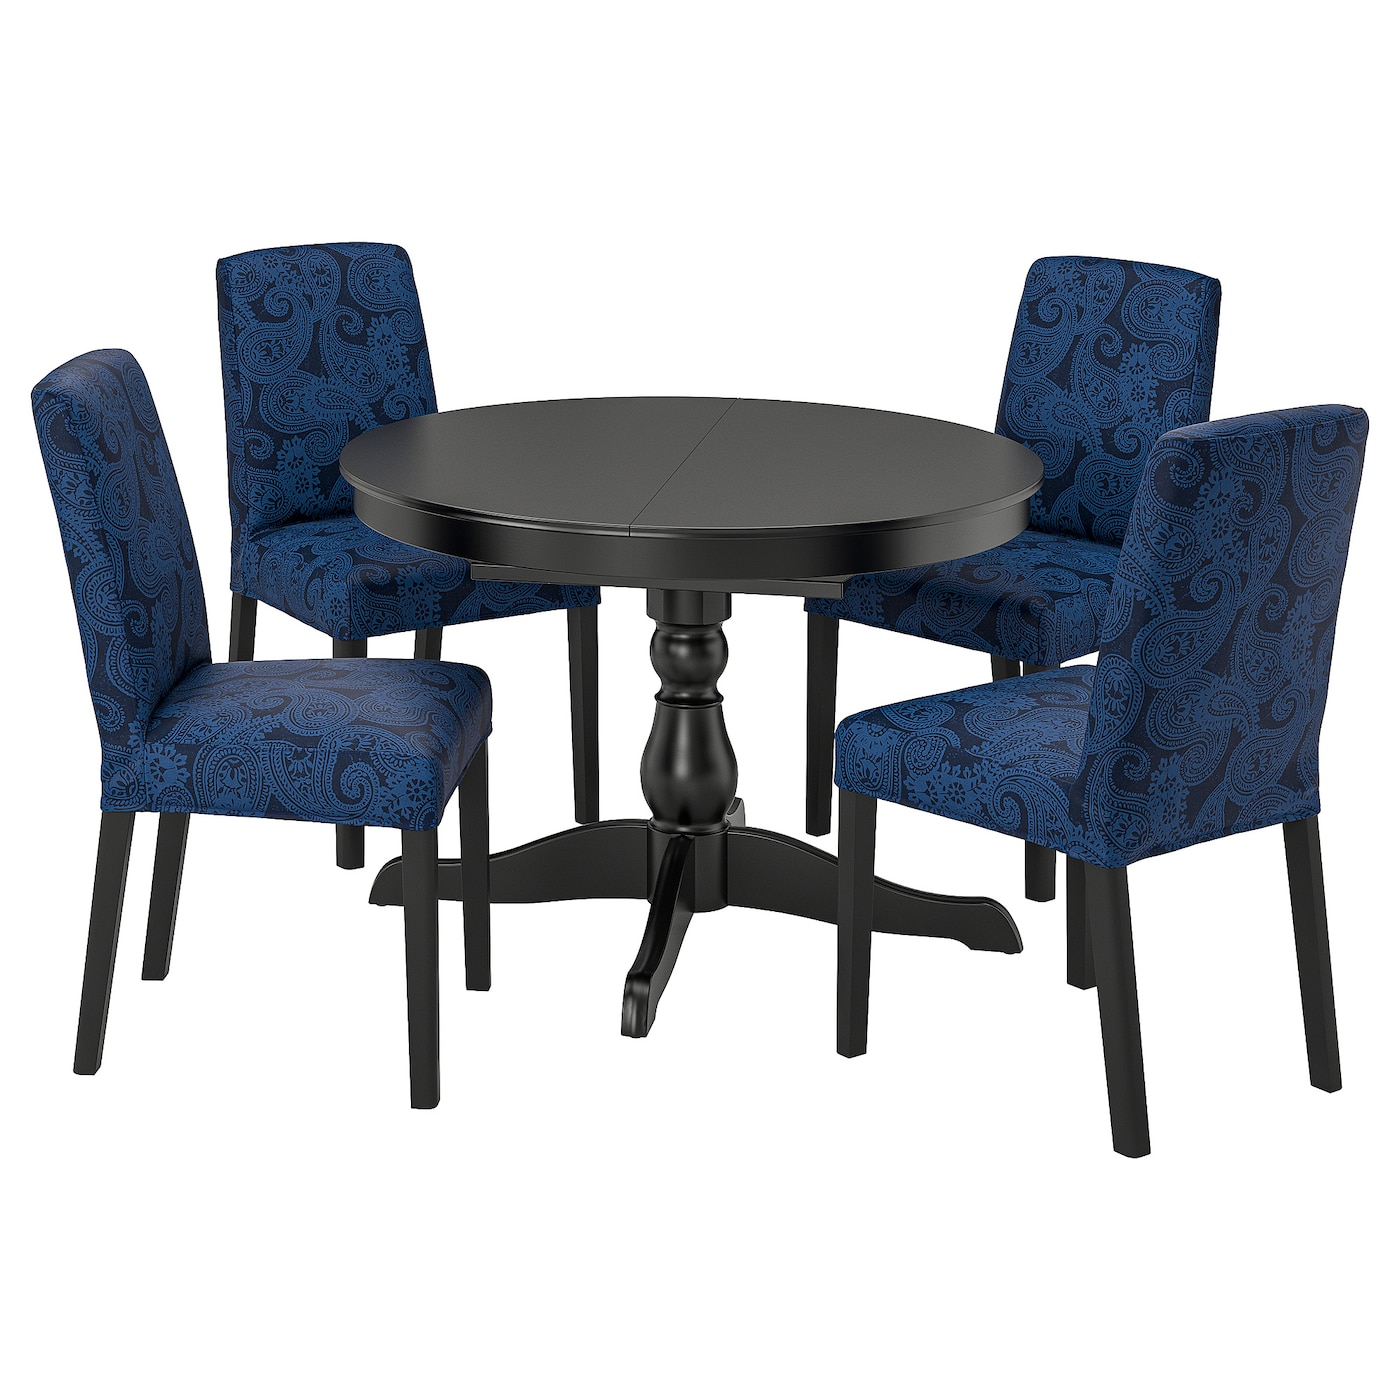 Стол и 4 стула - INGATORP / BERGMUND IKEA/ ИНГАТОРП/БЕРГМУНД ИКЕА, 110х87х74 см, синий с рисунком/коричневый